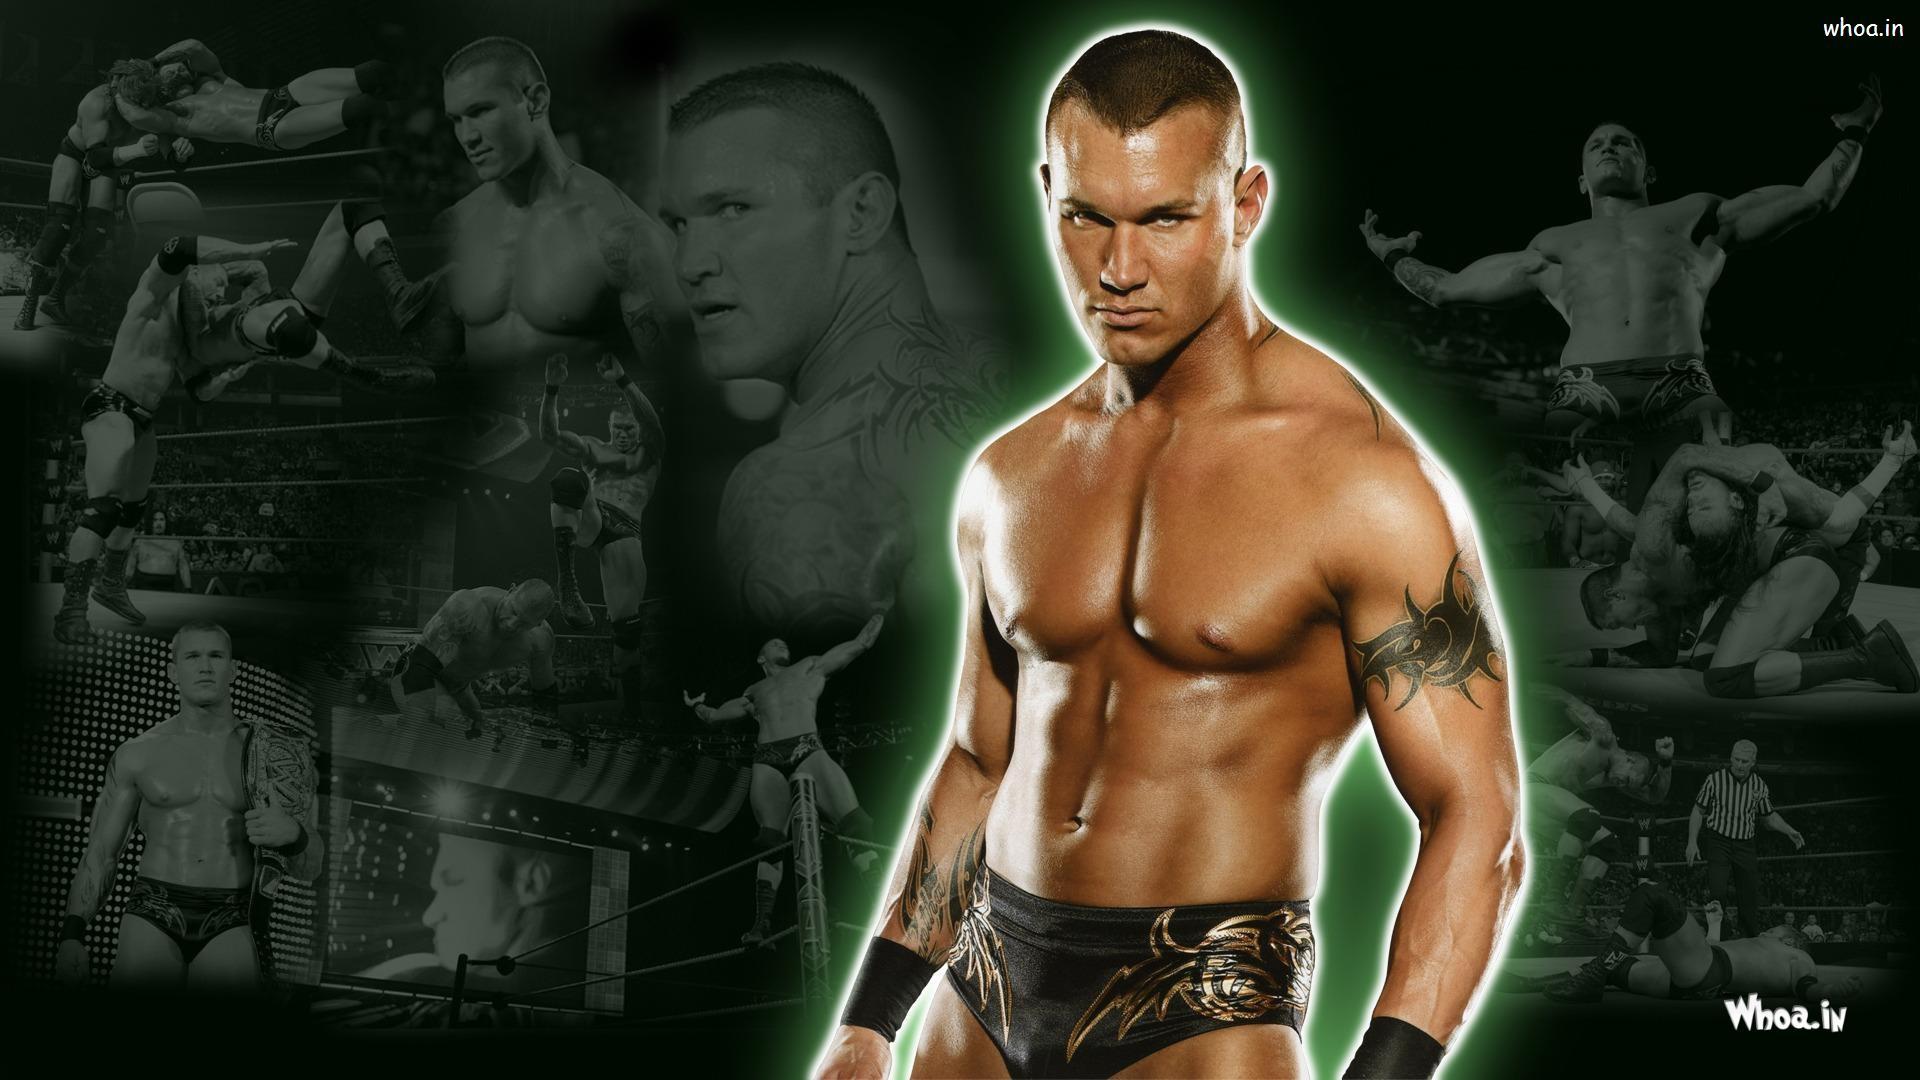 Randy Orton Multi Action Look HD WWE Wrestler Wallpapers